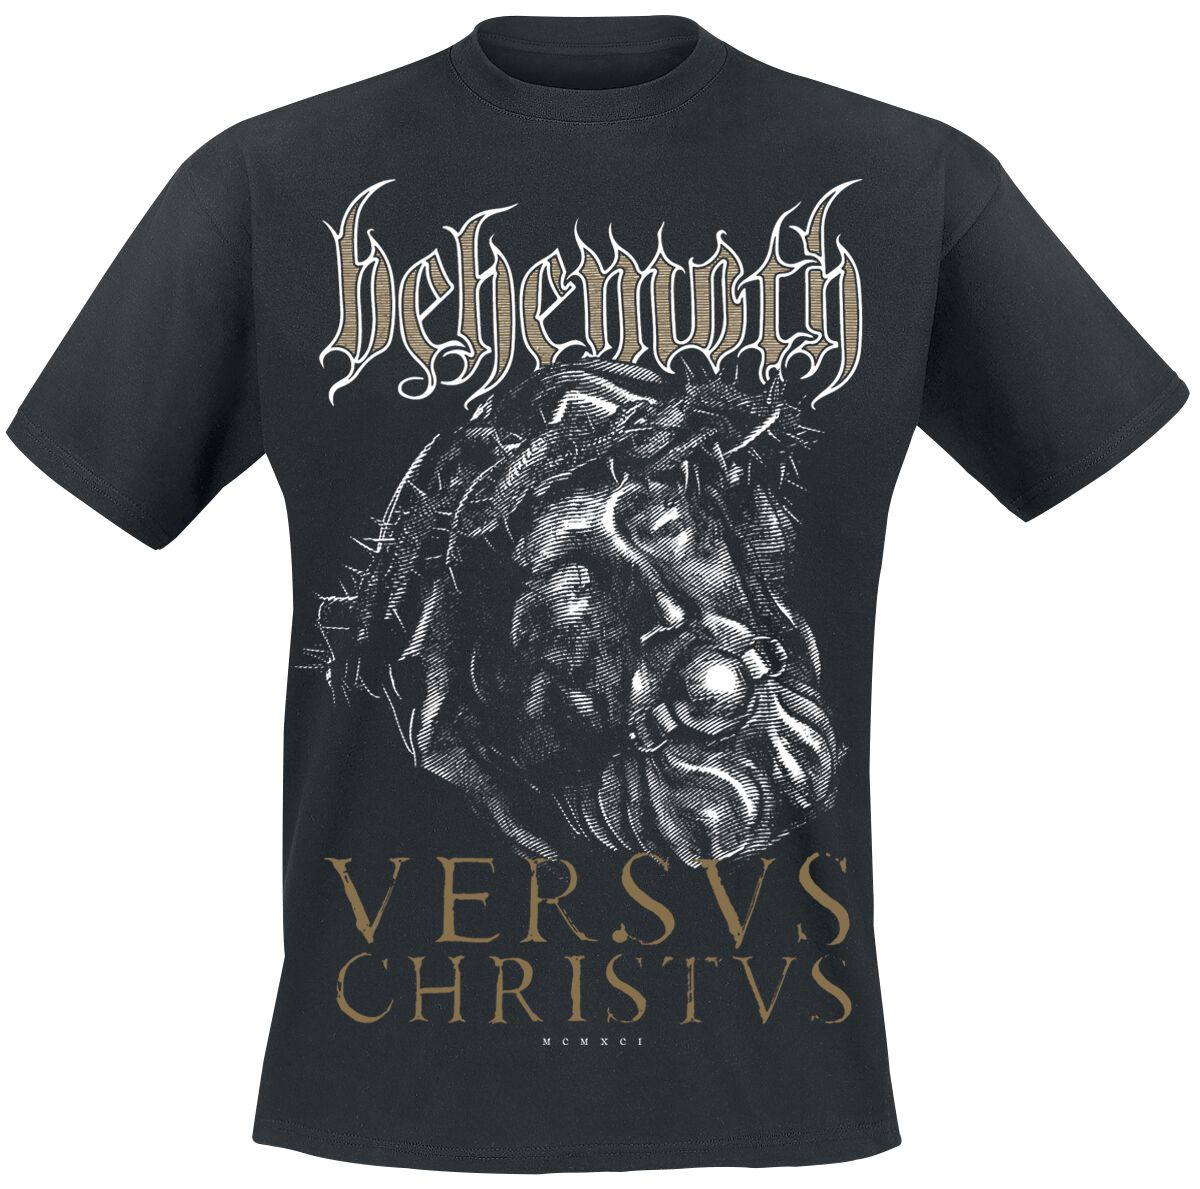 Behemoth Versvs Christvs T-Shirt schwarz in S